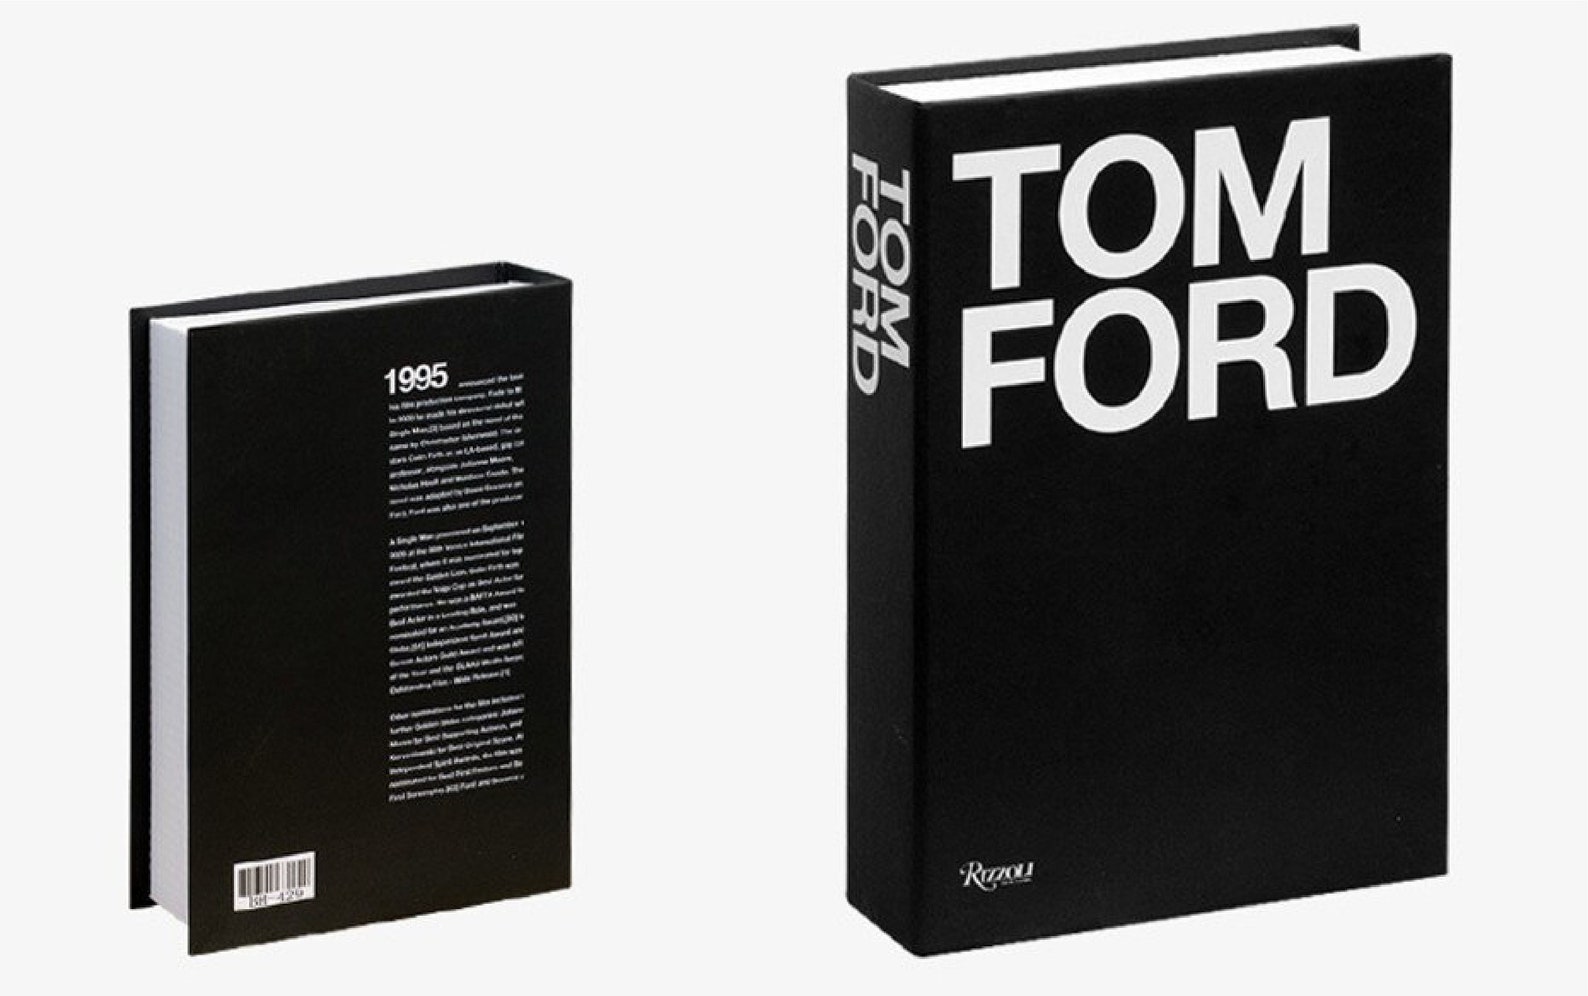 Tom Ford Book of Decorative Storage | Etsy